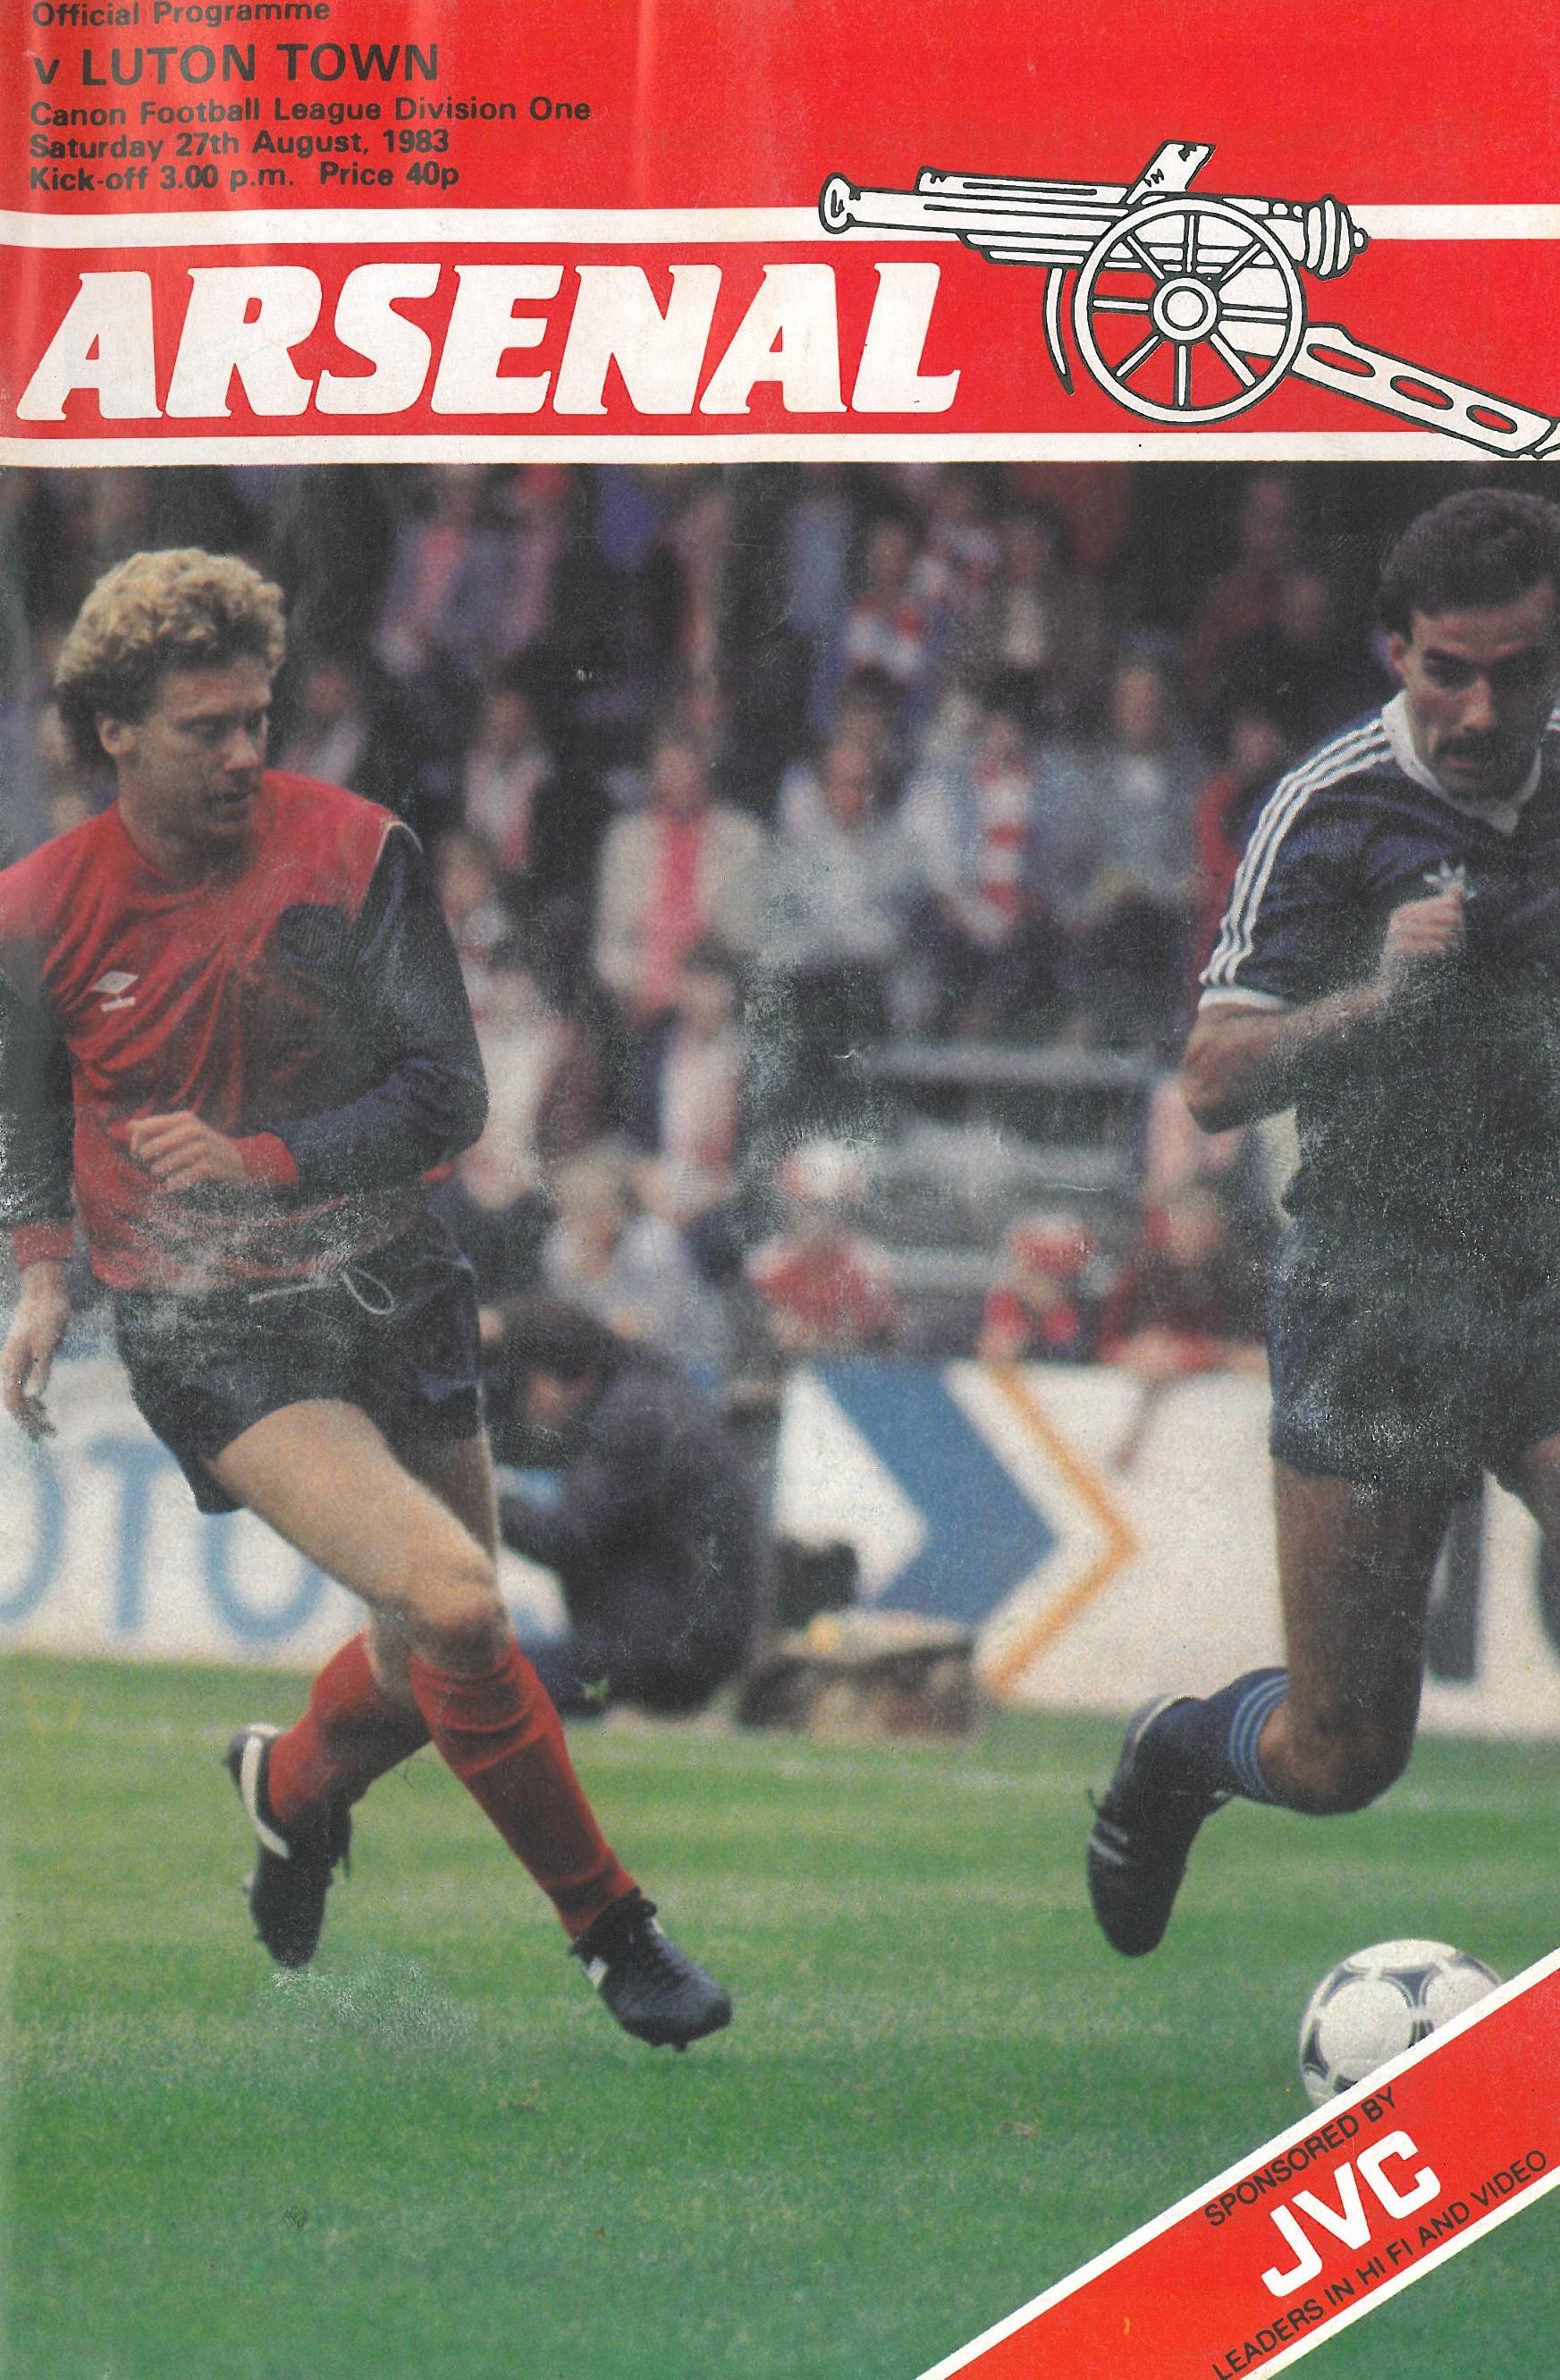 Programme: Arsenal vs Luton Town 1983/1984